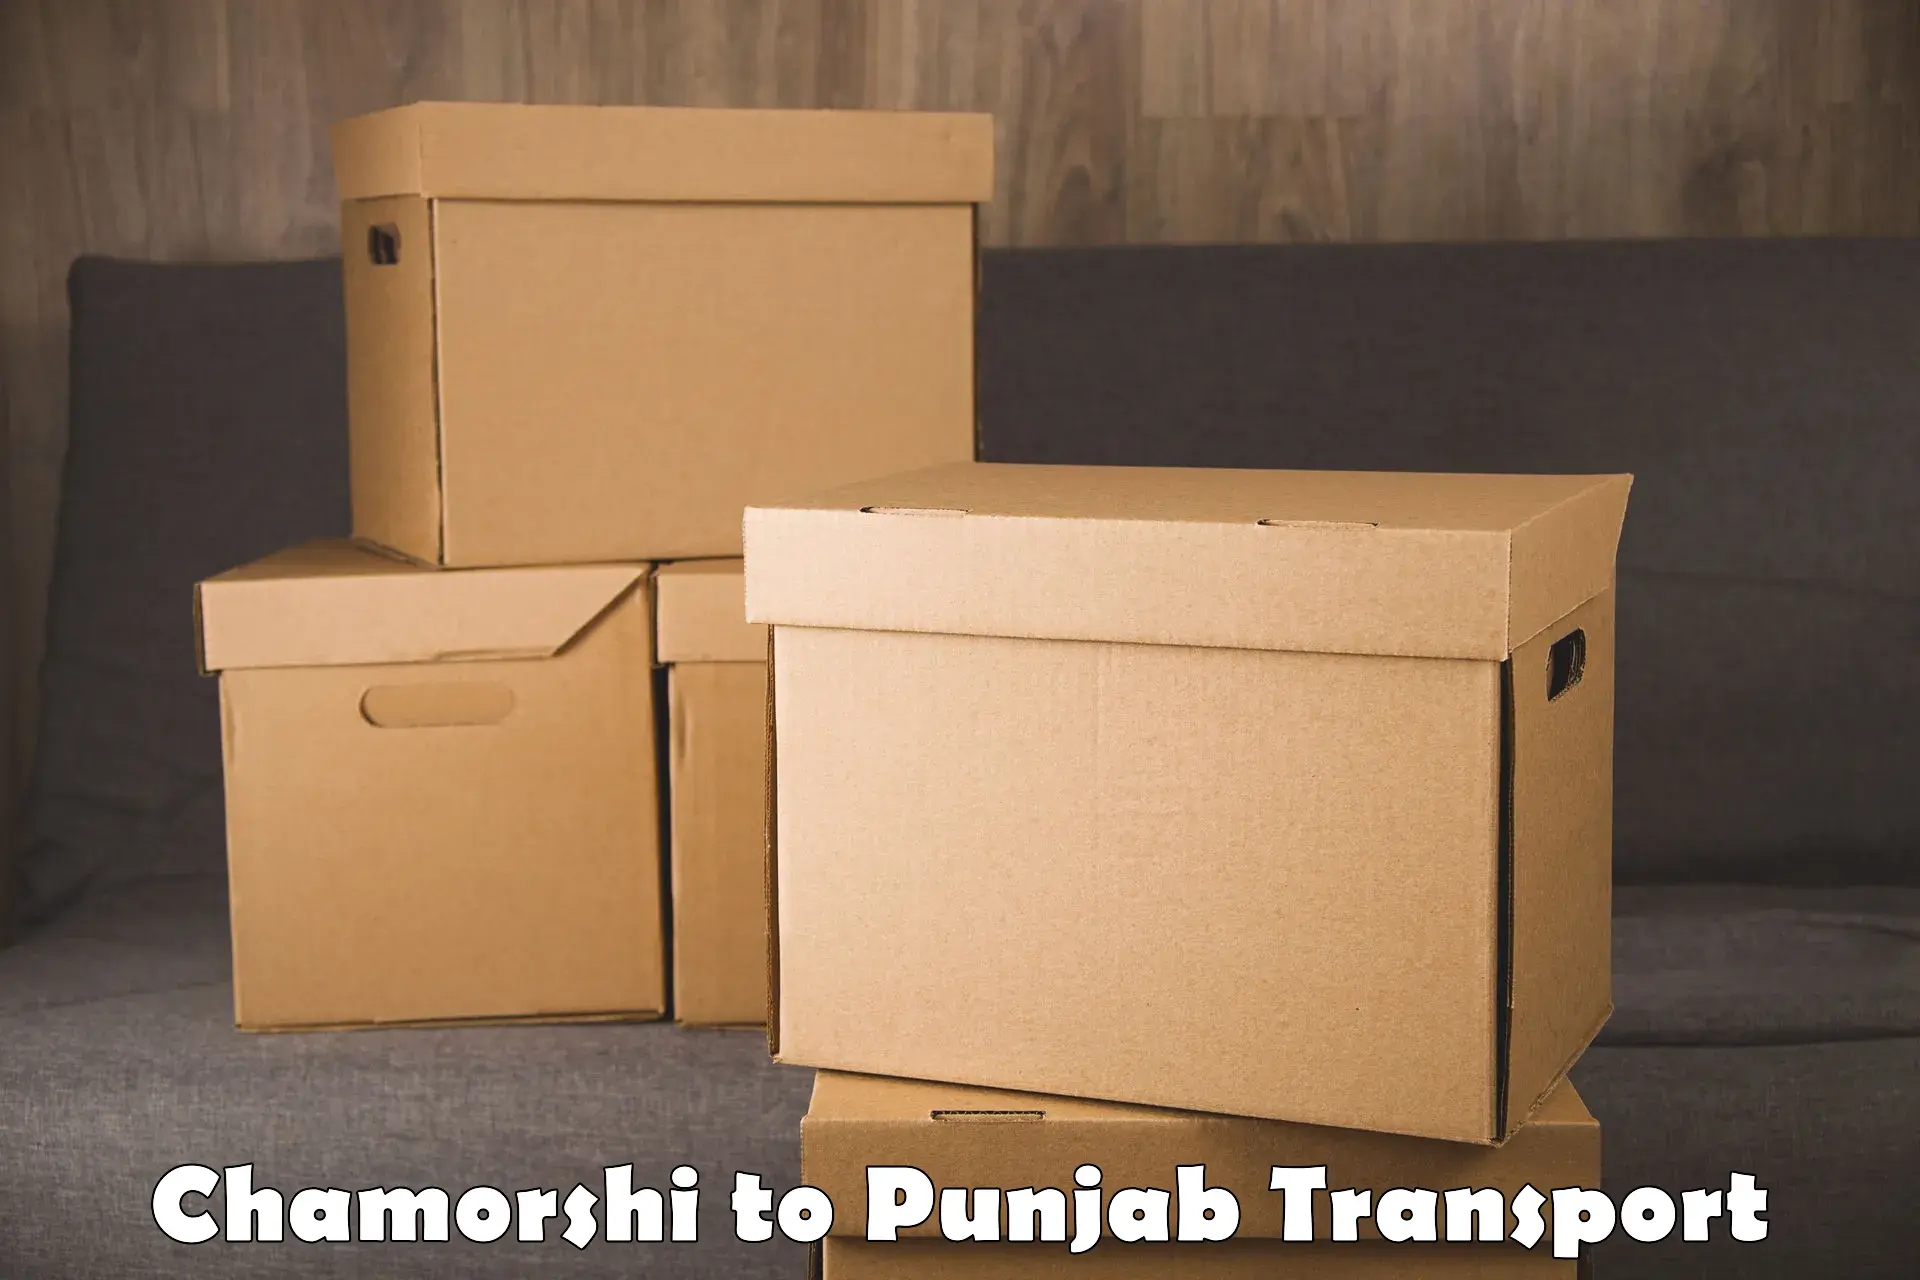 Truck transport companies in India Chamorshi to Punjab